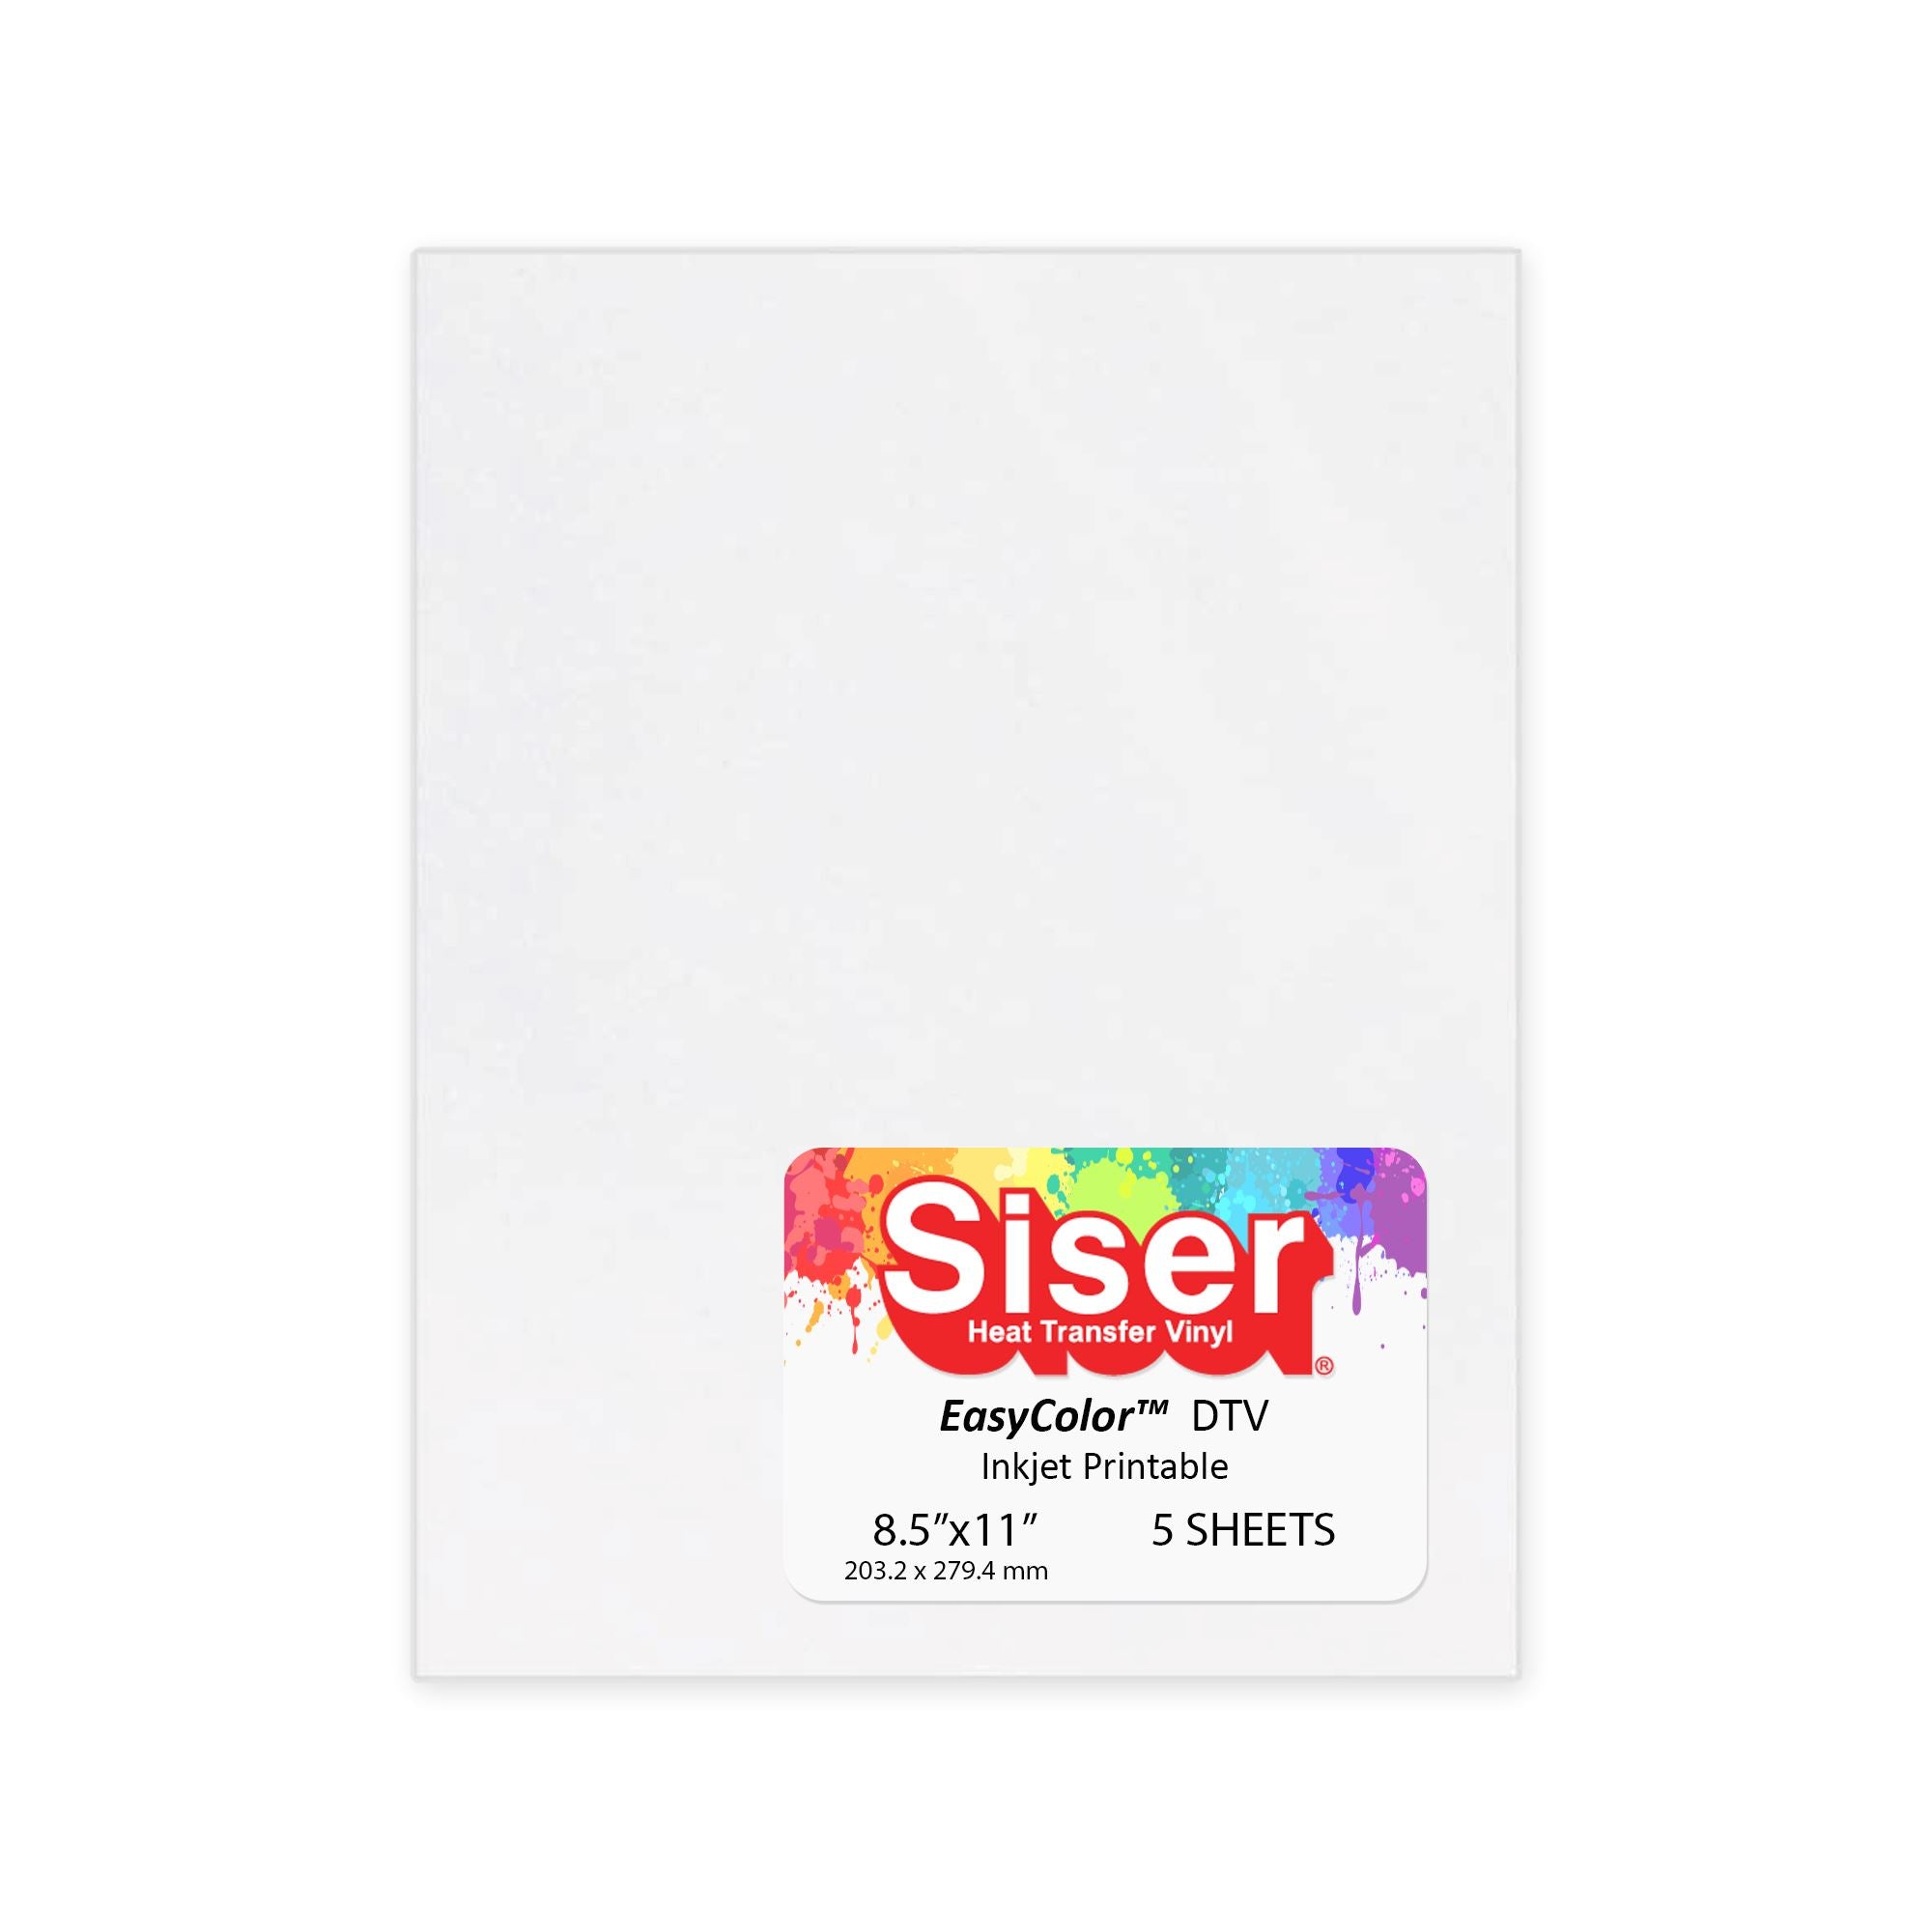 Siser HTV Color Guide - Standout Vinyl